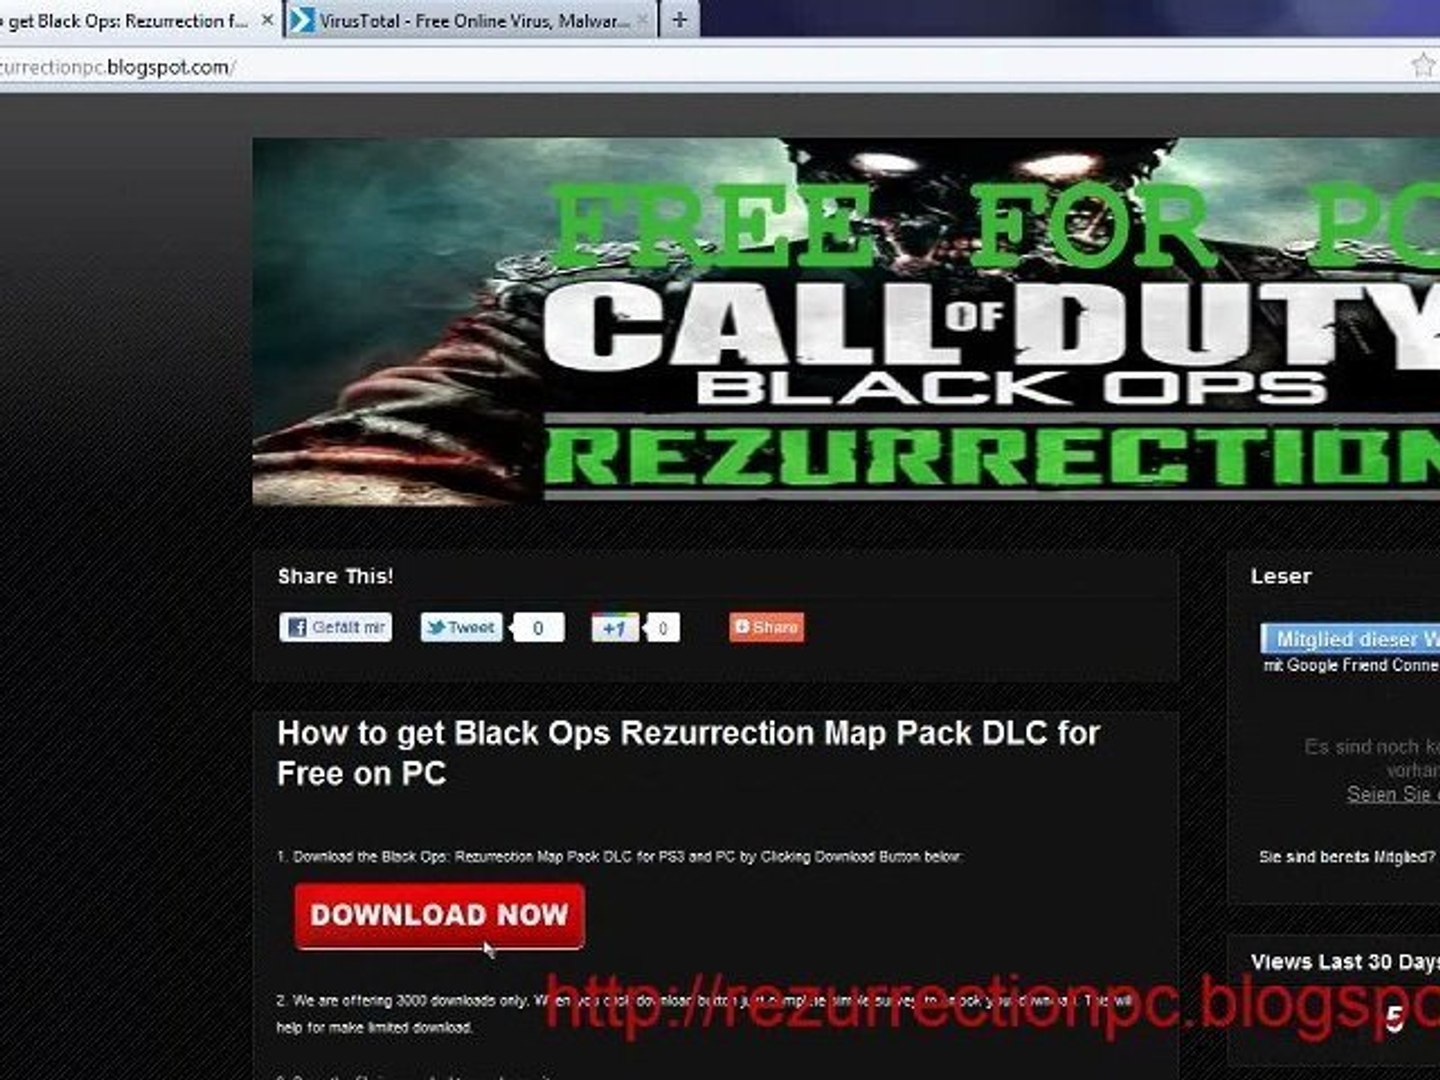 Black Ops Rezurrection Free Download Xbox 360